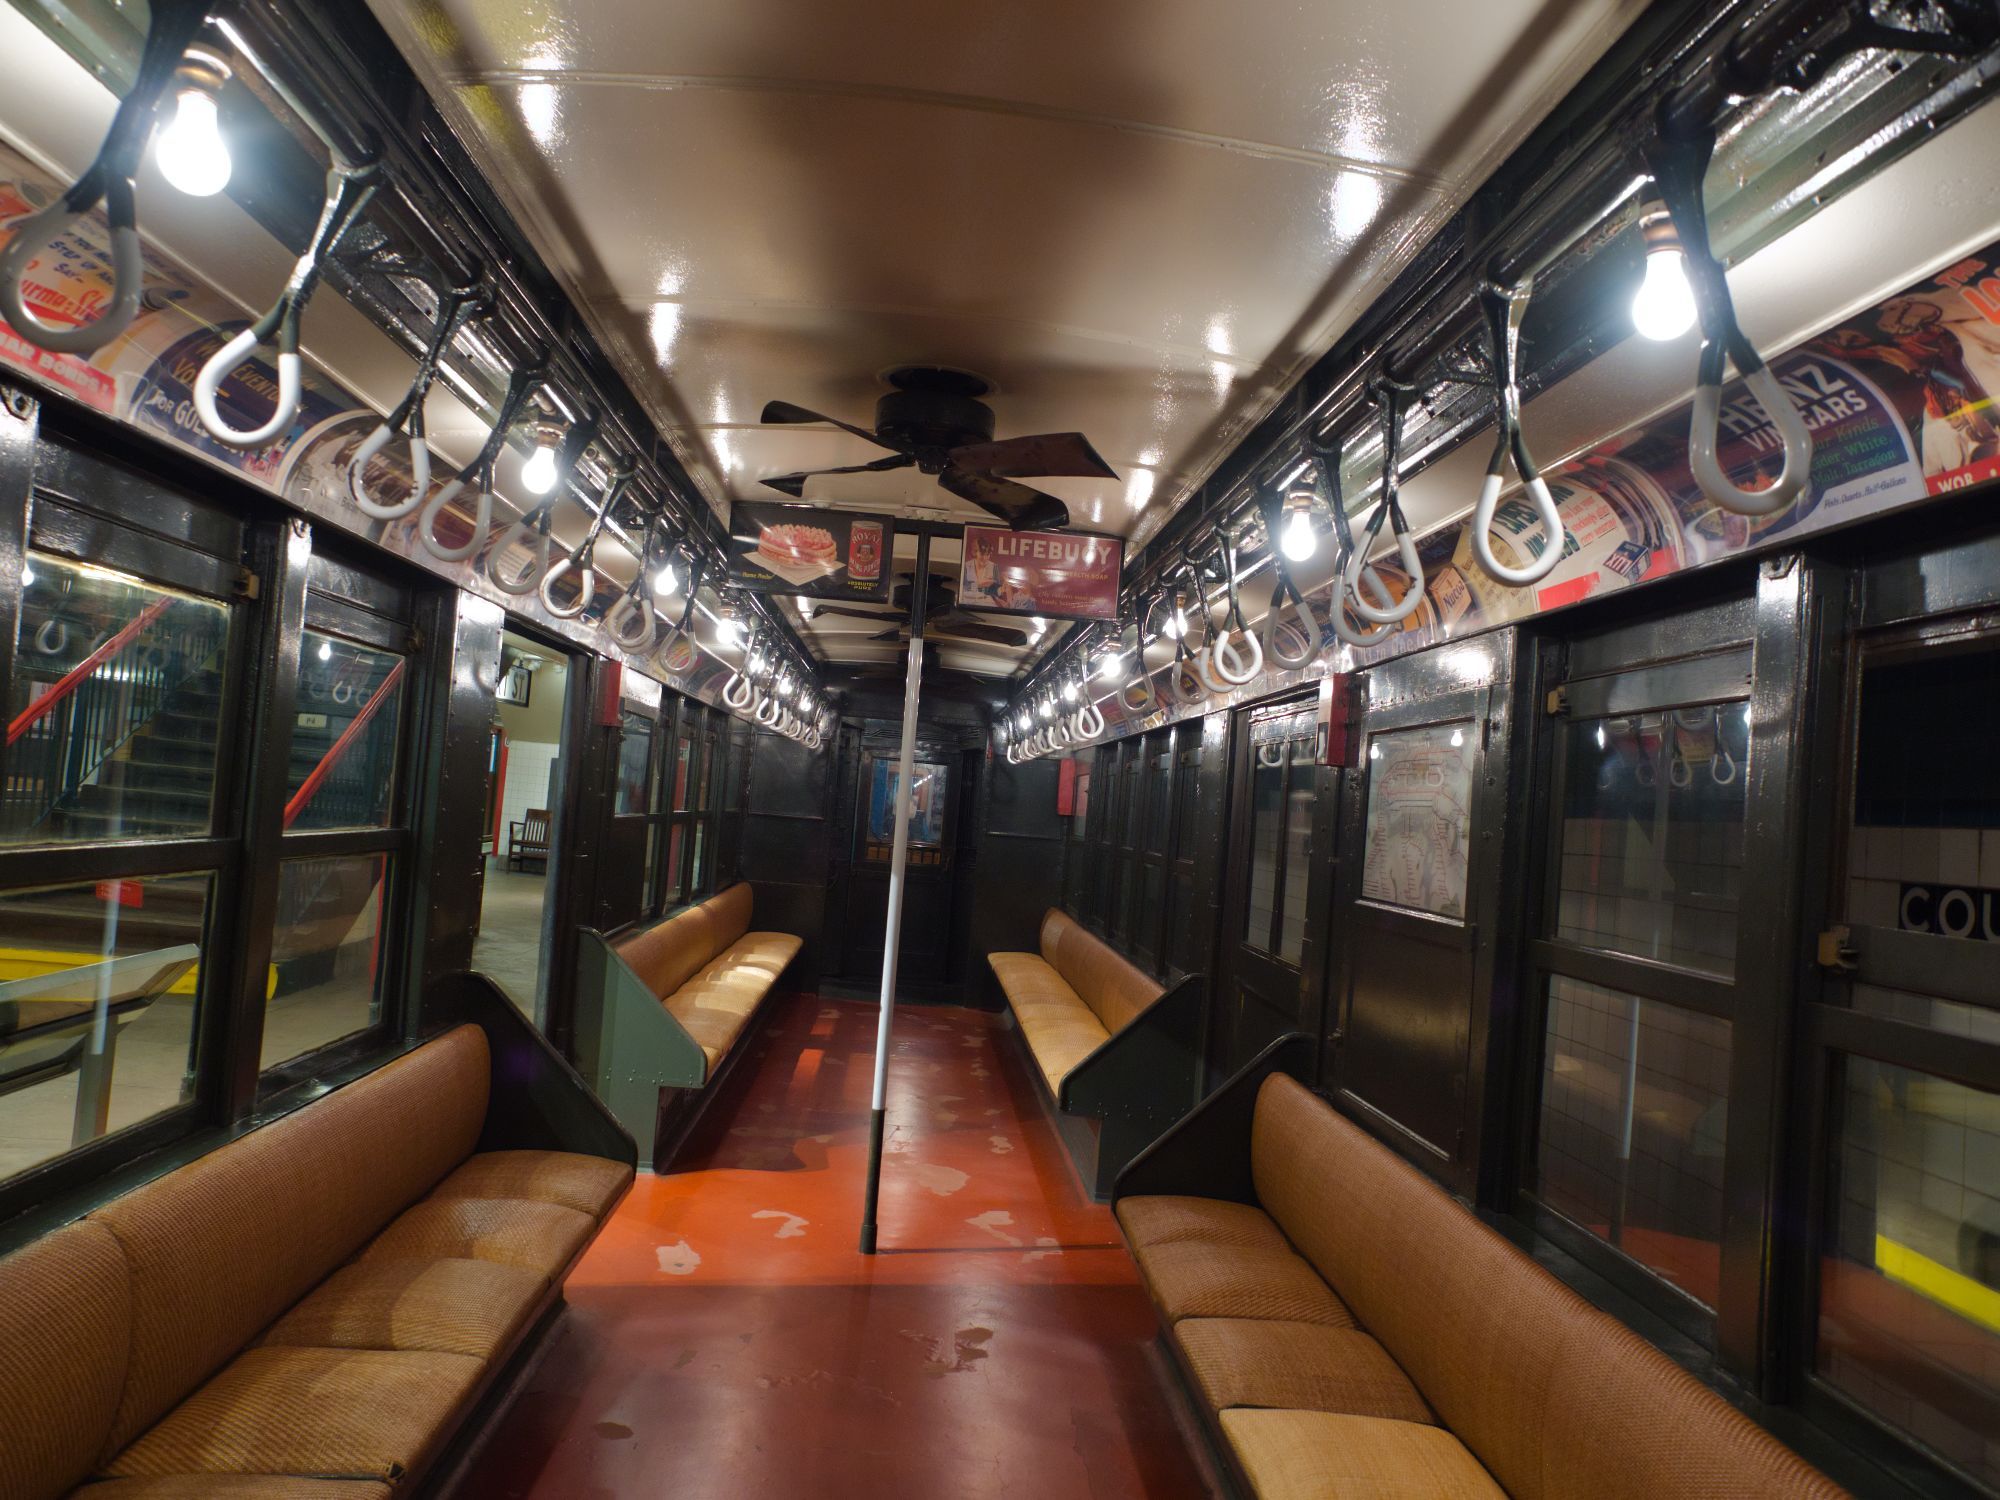 Heritage subway car